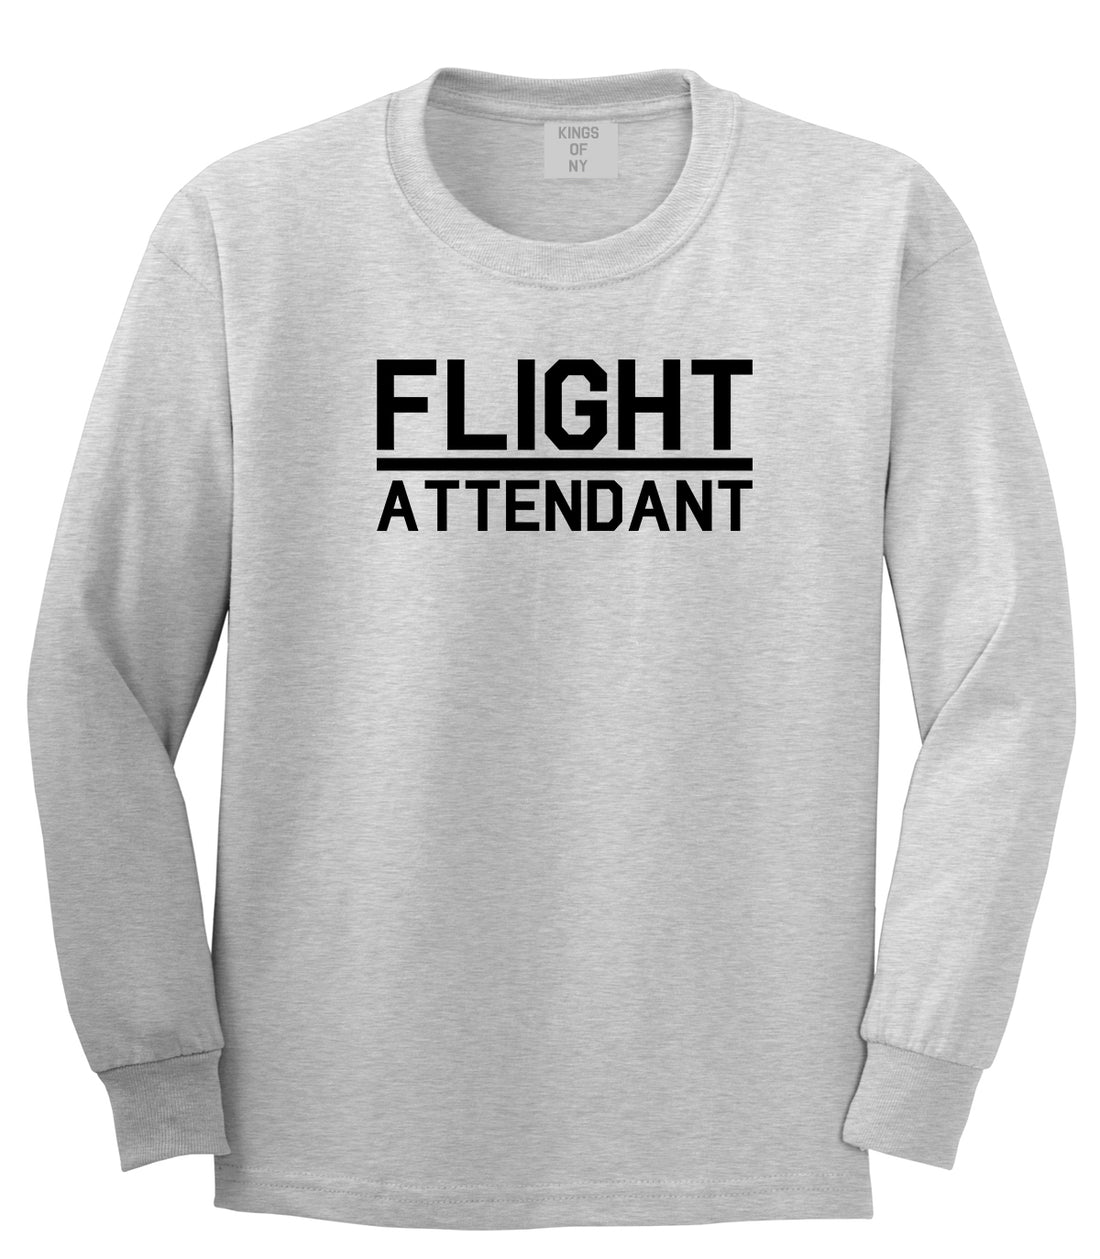 Flight Attendant Stewardess Mens Grey Long Sleeve T-Shirt by KINGS OF NY